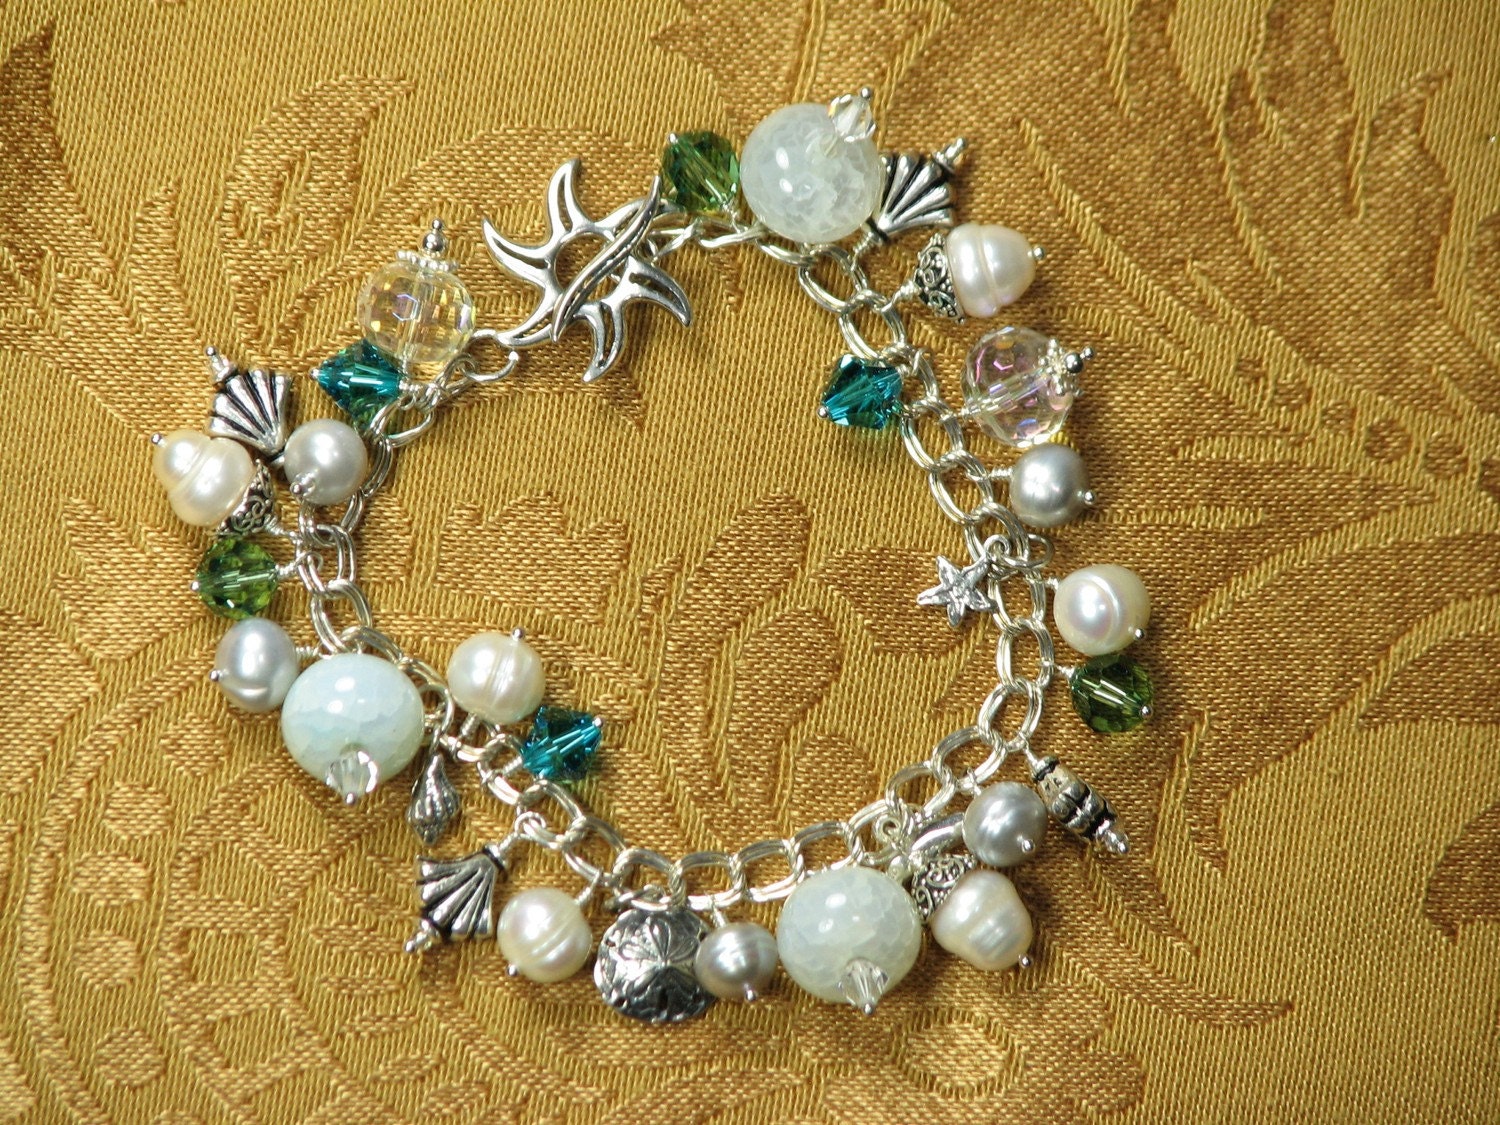 Mediterranean Charm Bracelet with Sterling Silver, Semi-precious Gemstones and Swarovski Crystal